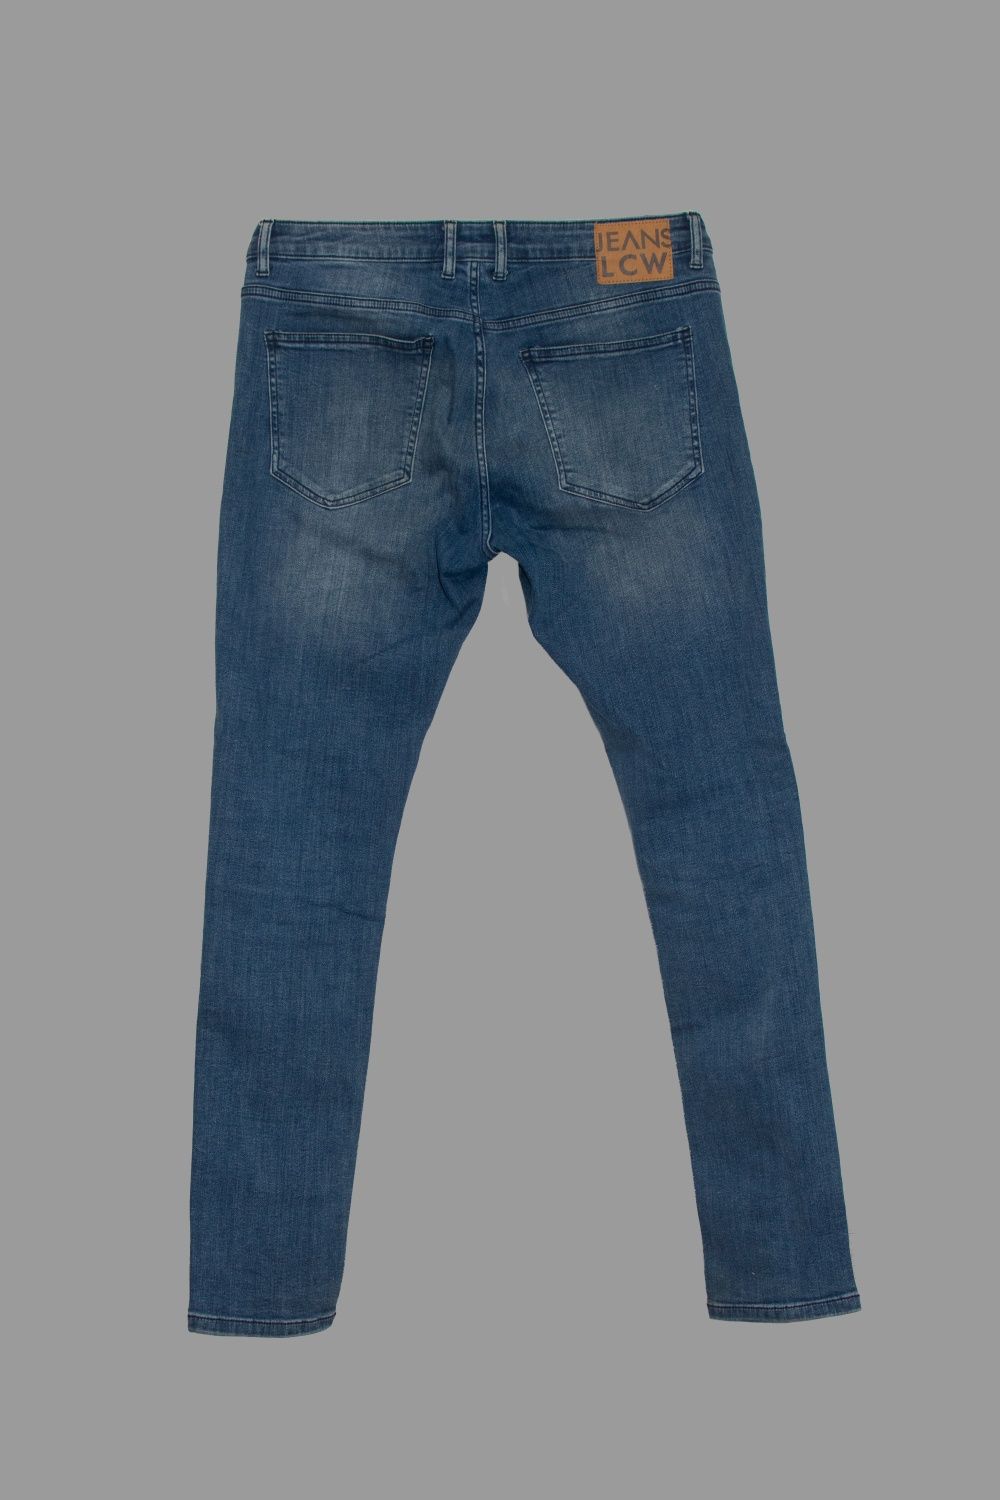 LC waikiki джинсы мужские super skinny fit